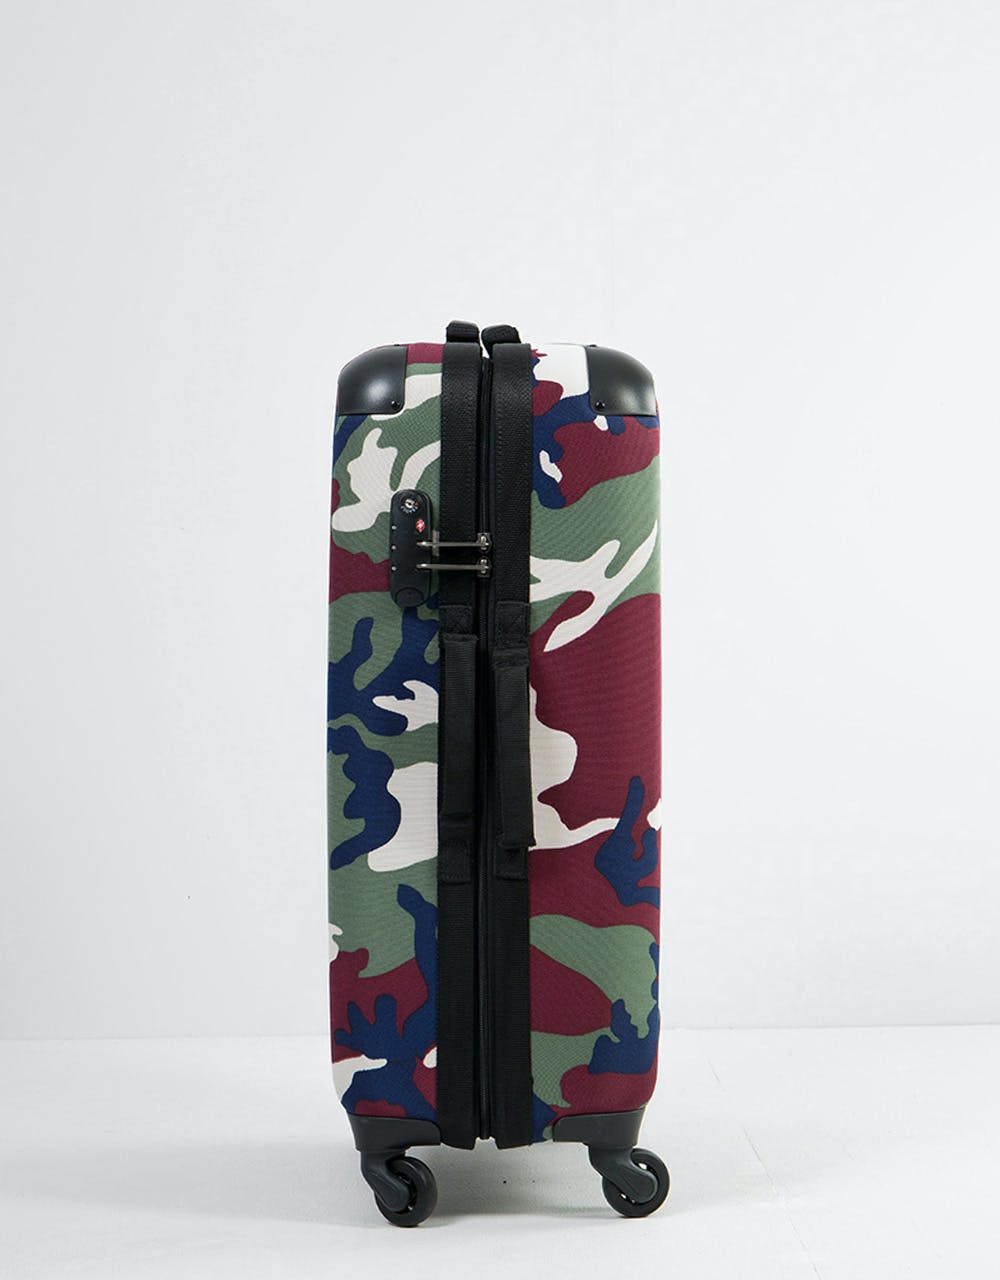 Eastpak Tranzshell Medium Wheeled Luggage Bag - Camo Green